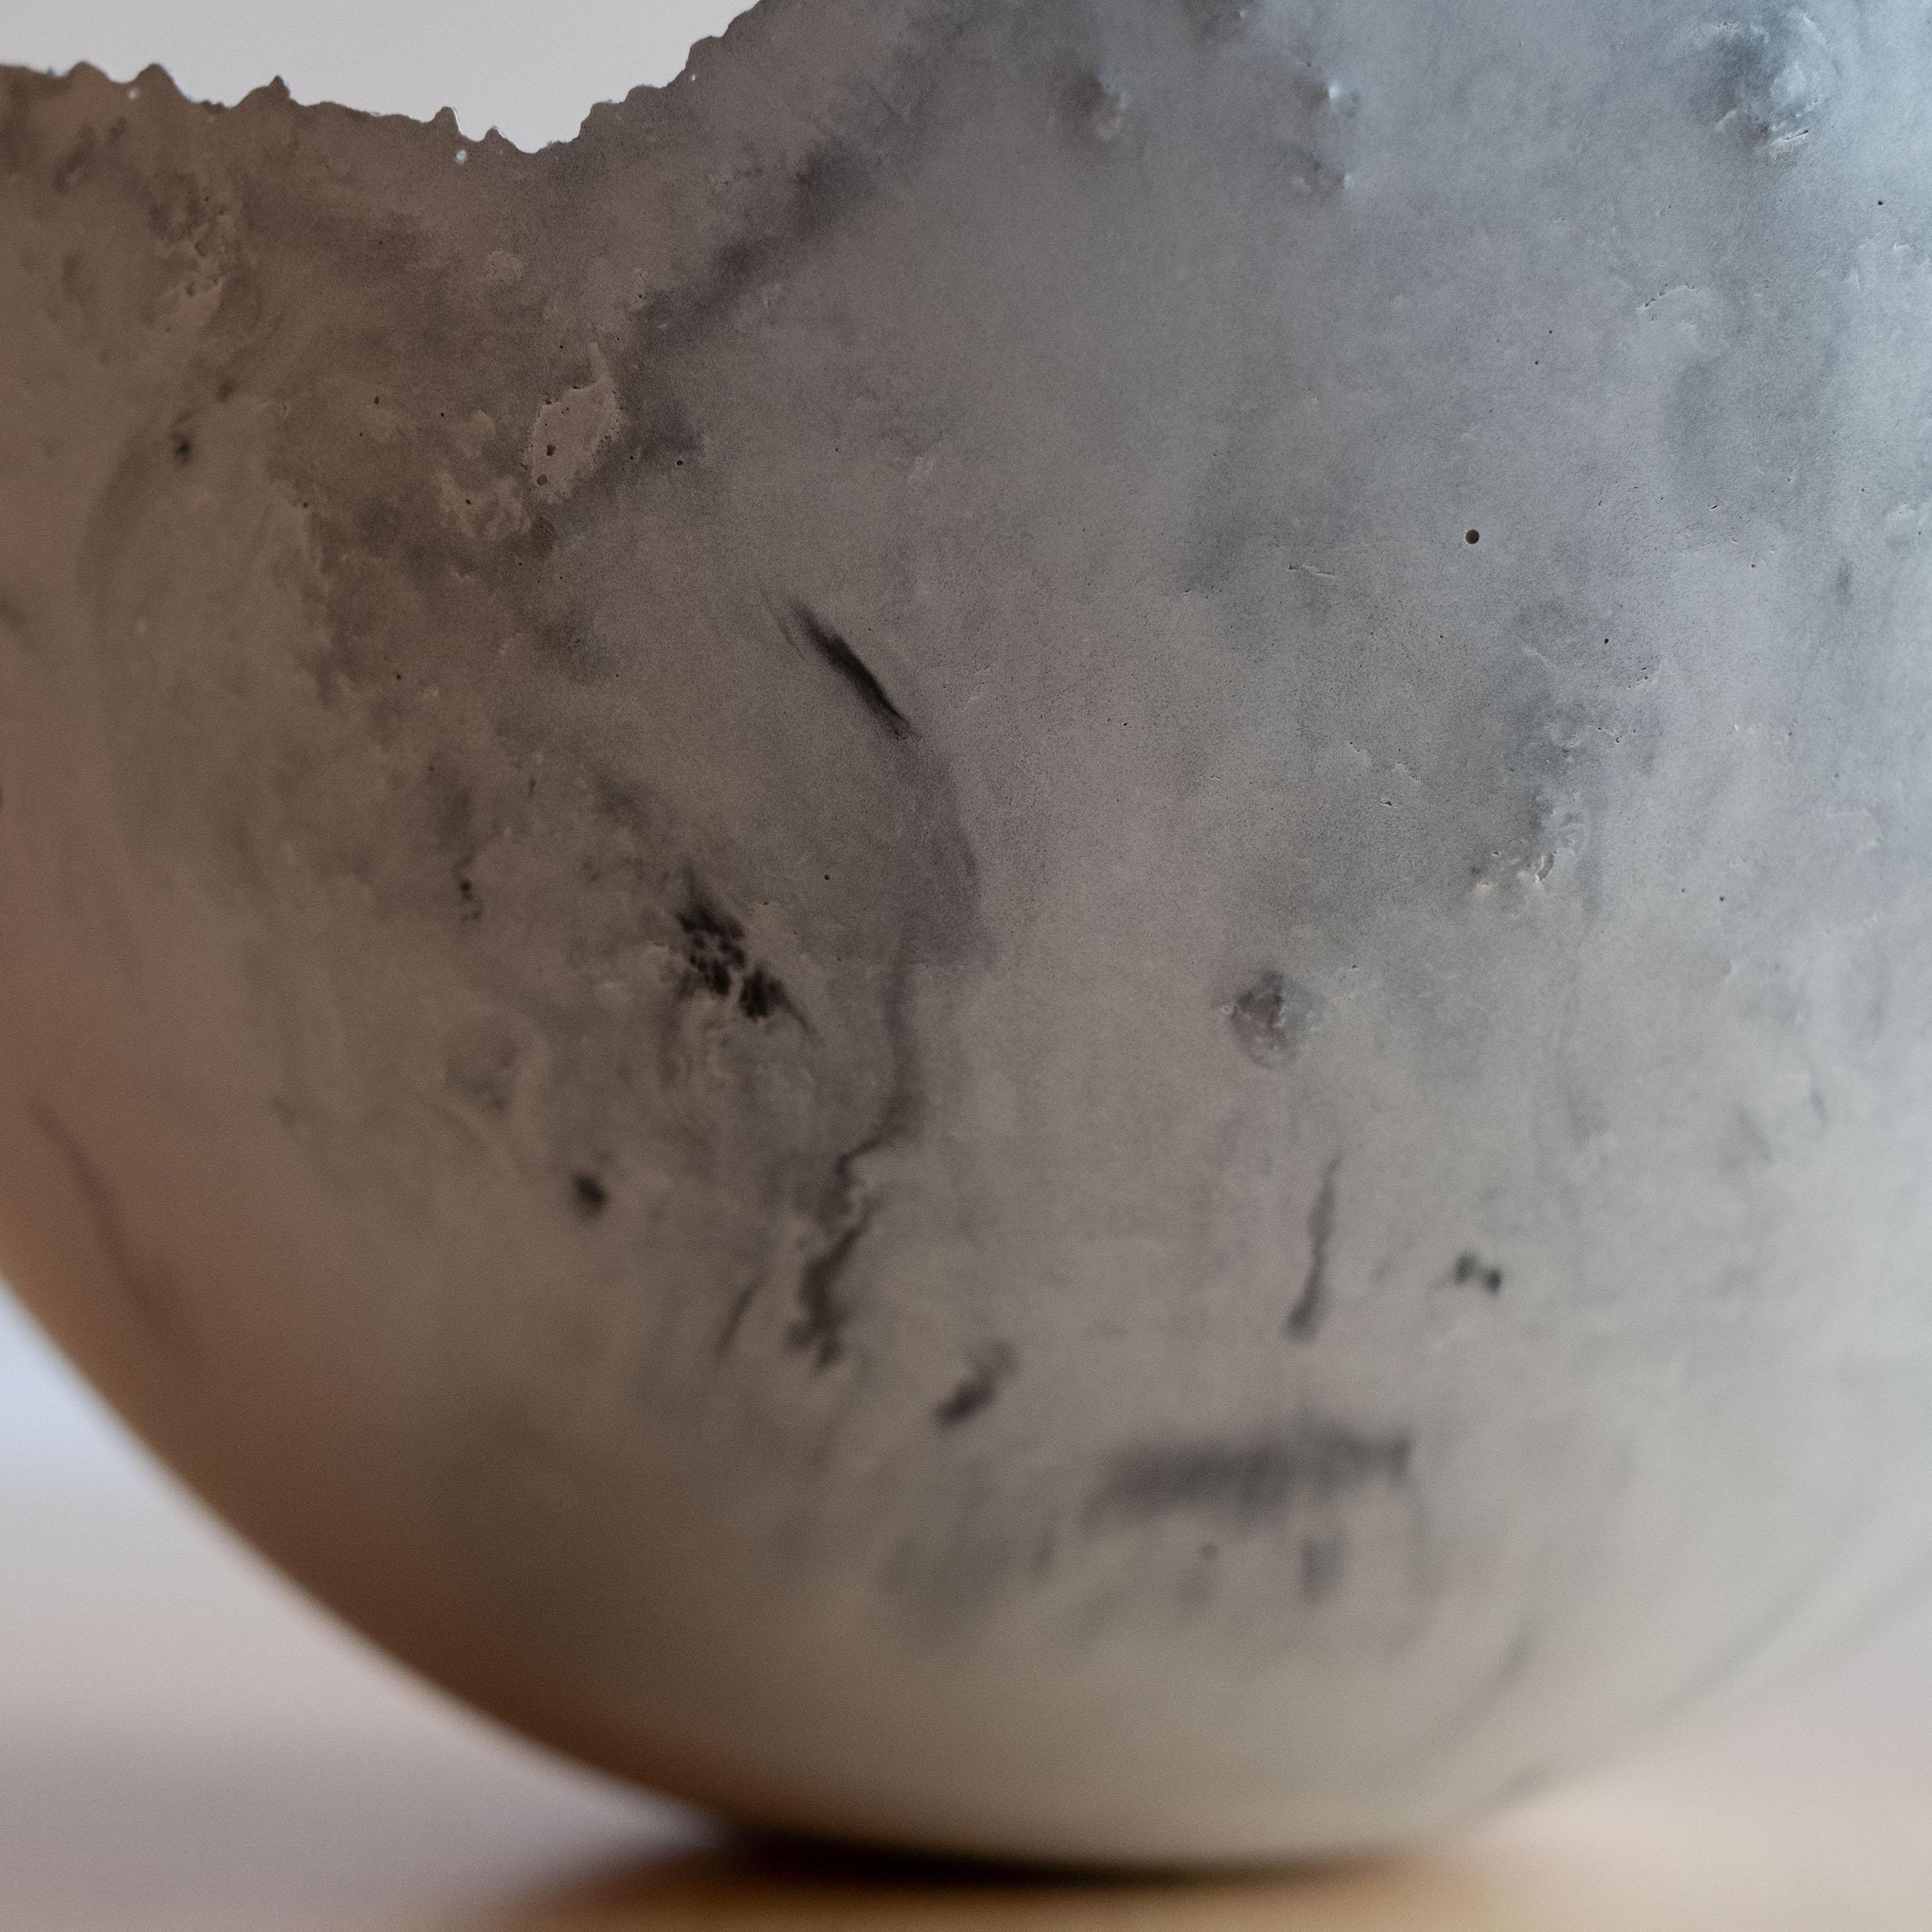 Handmade Cast Concrete Bowl in Grey by Umé Studio For Sale 8